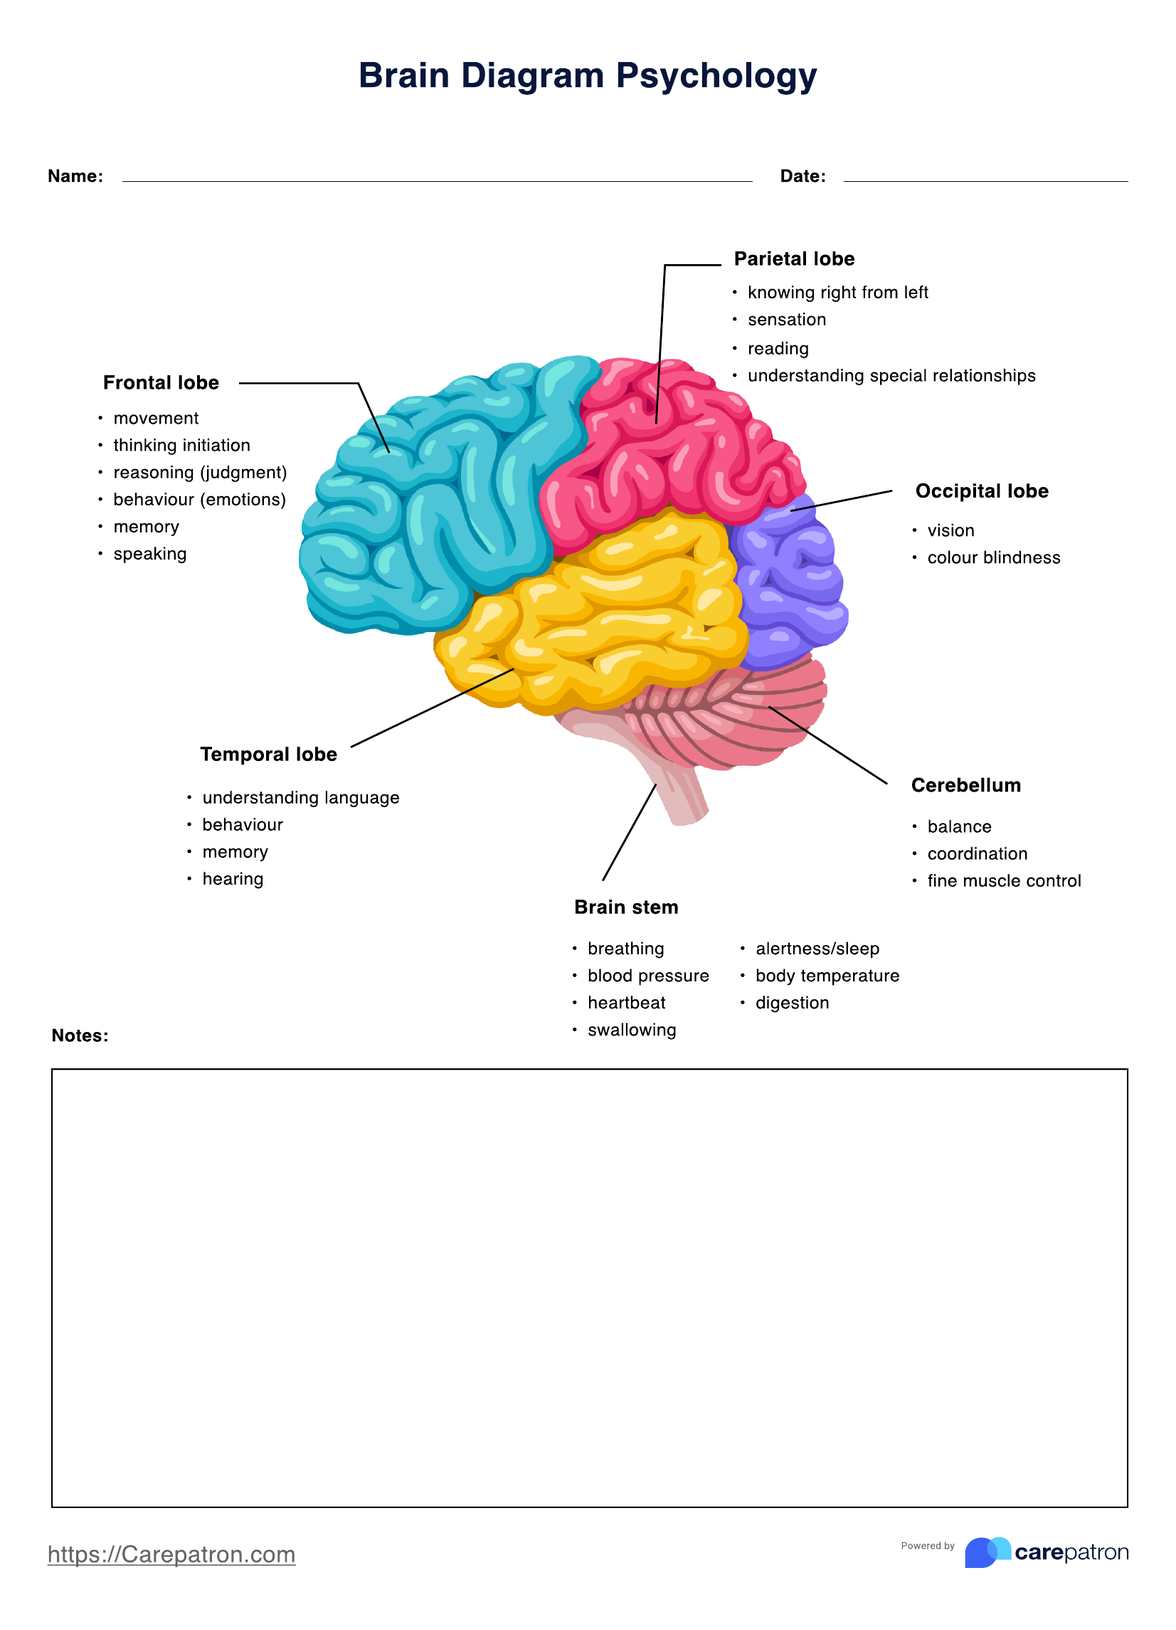 Brain Diagram Psychology PDF Example